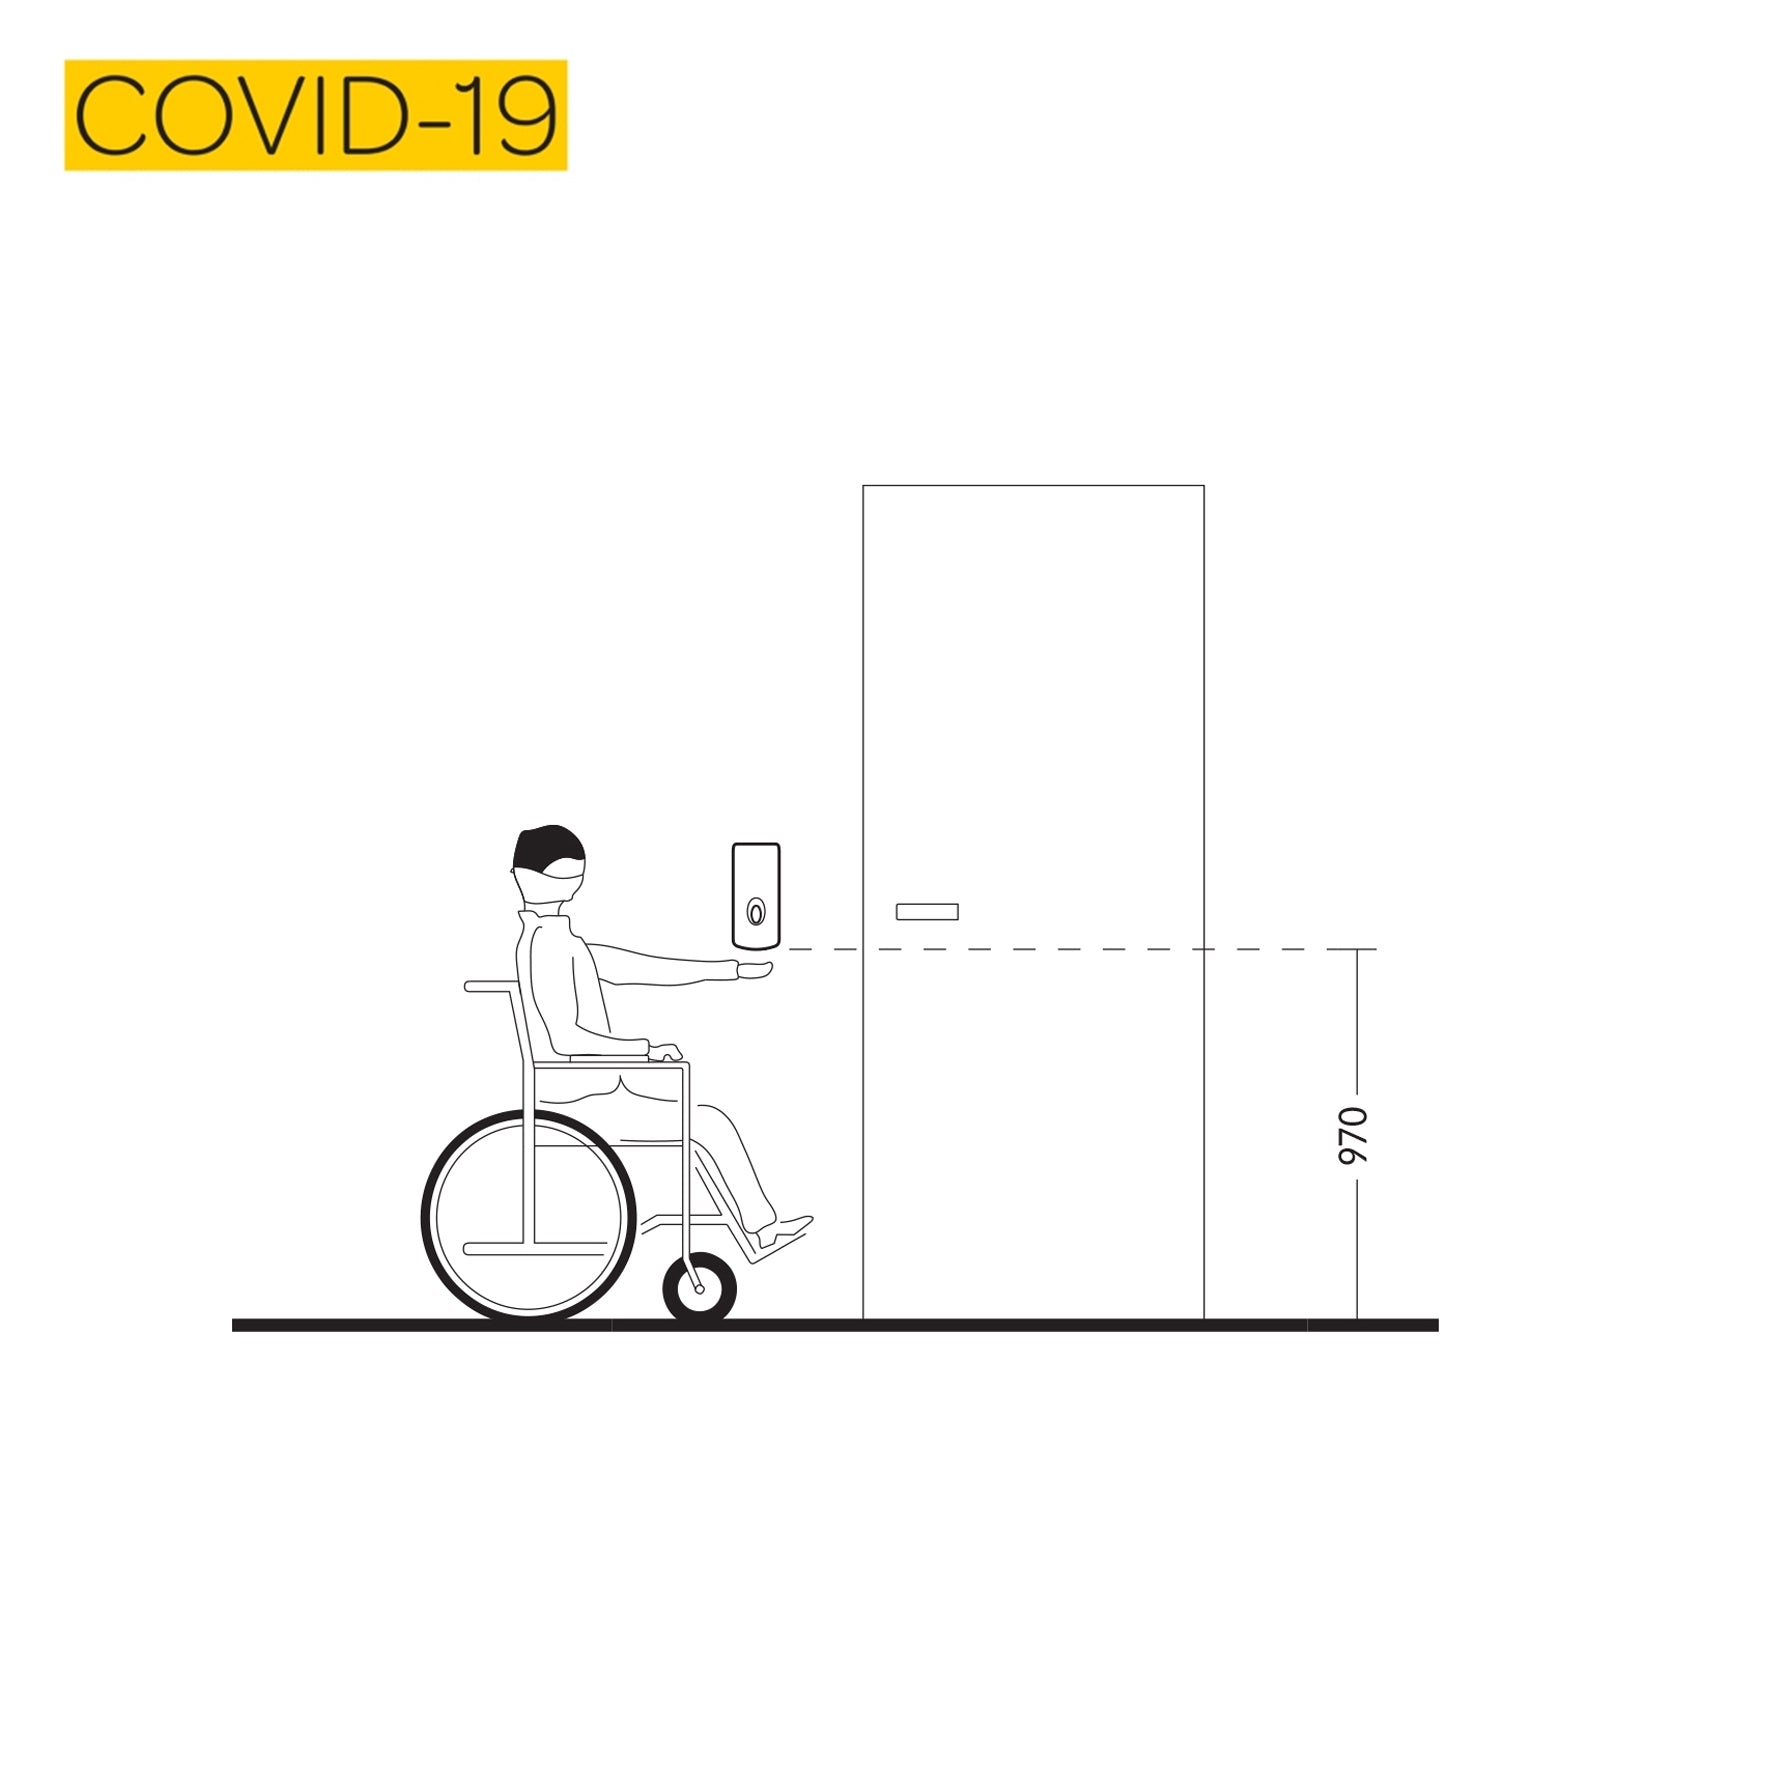 Designer's Guide for COVID-19: Hand Sanatising